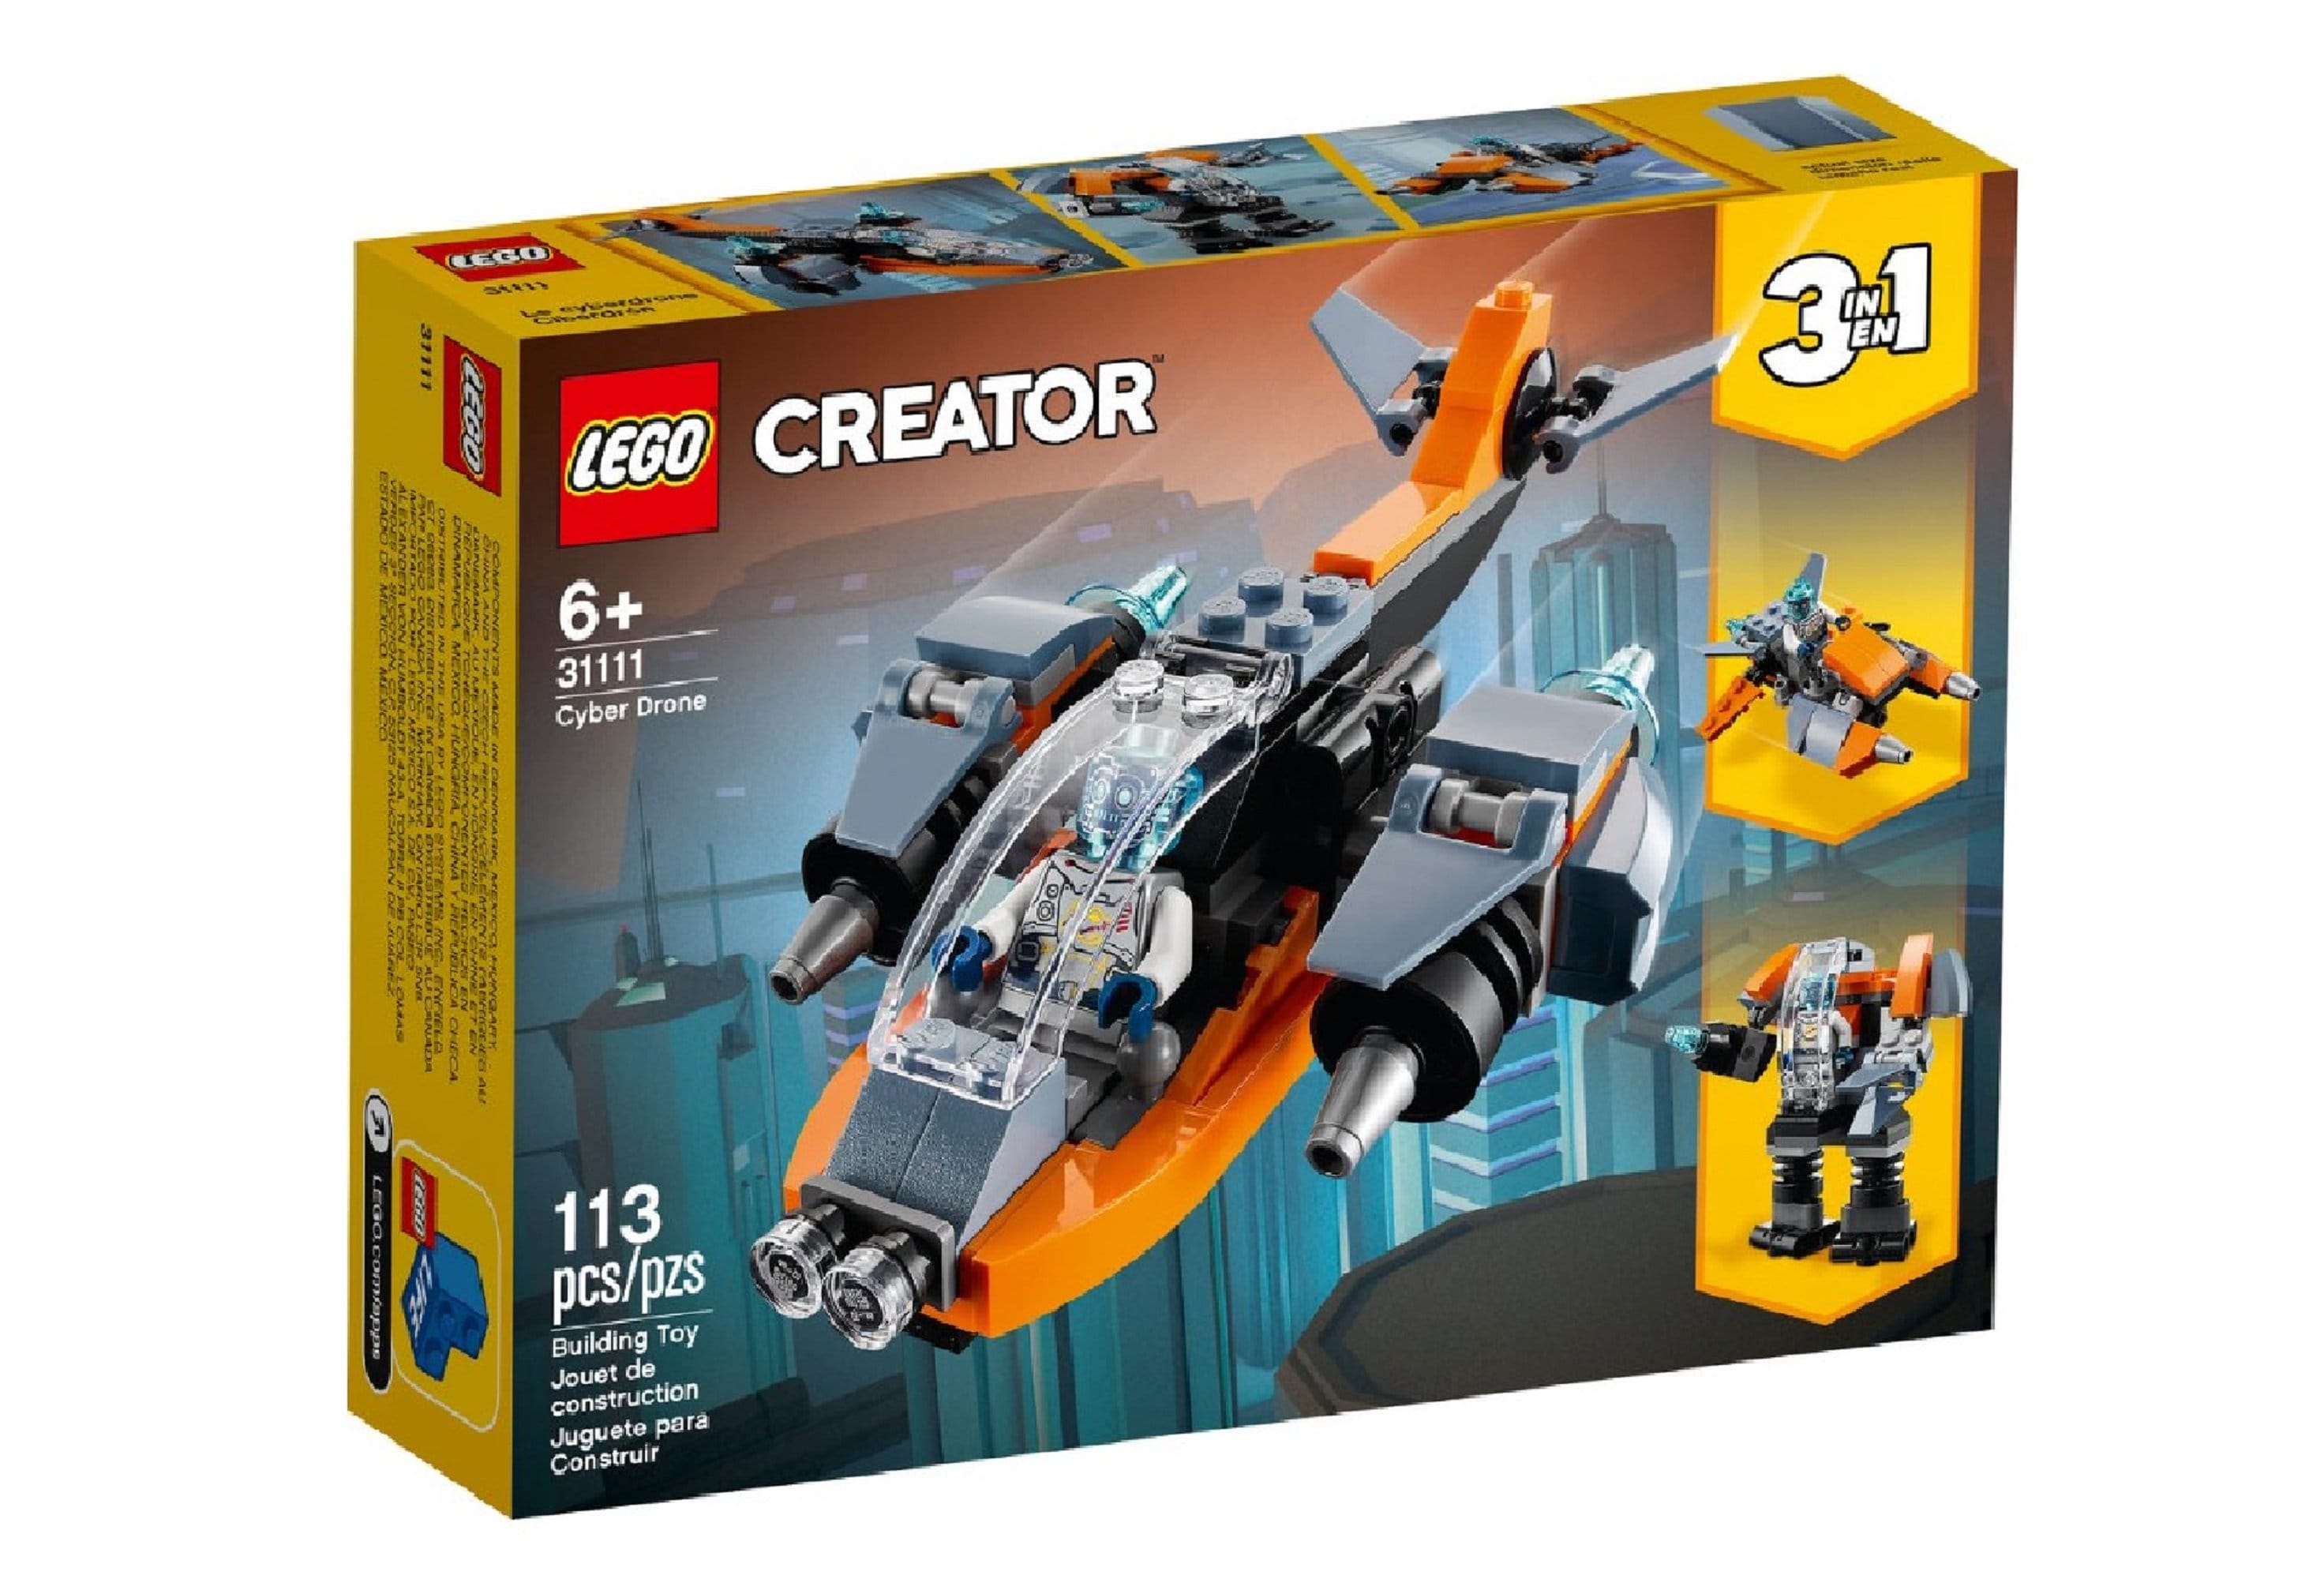 LEGO CREATOR 3 in 1 Cyber Drone Kit Set 31111 Brand New -  UK